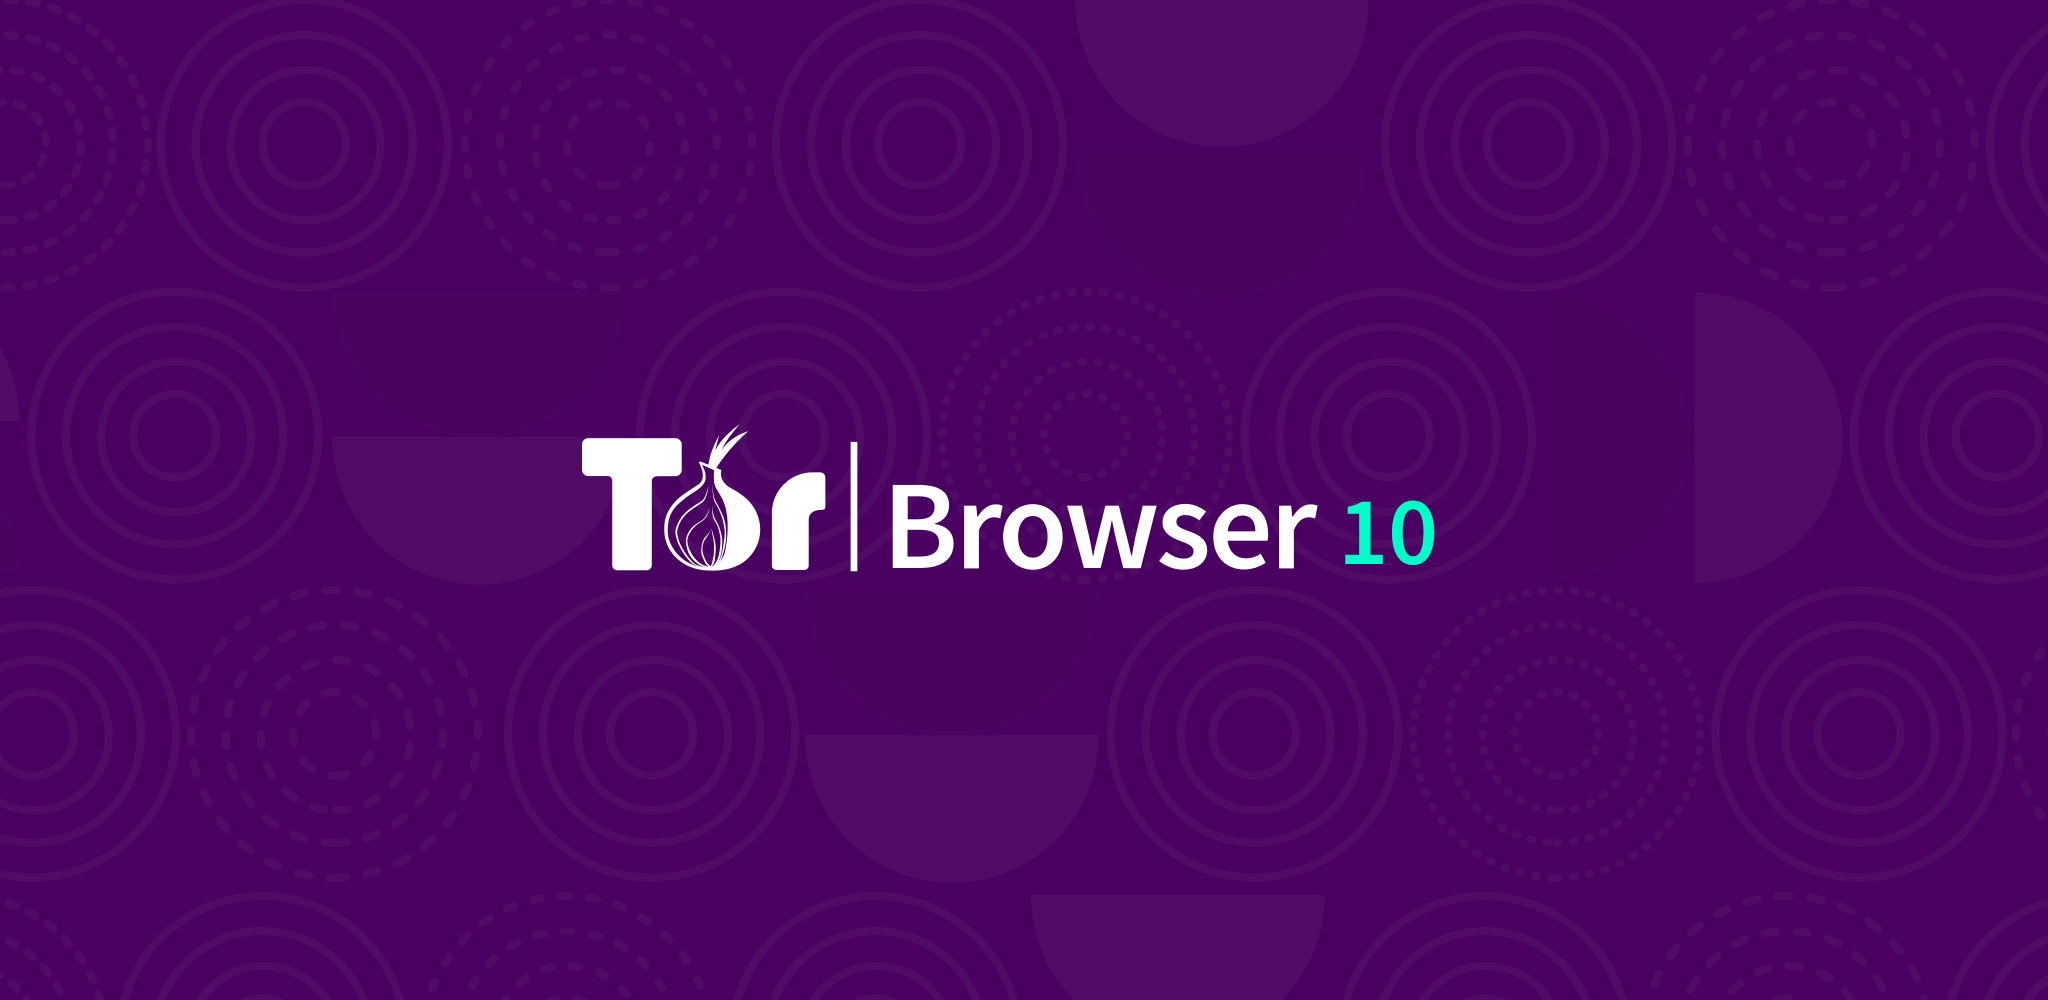 Tor browser f mega опера тор браузер скачать mega